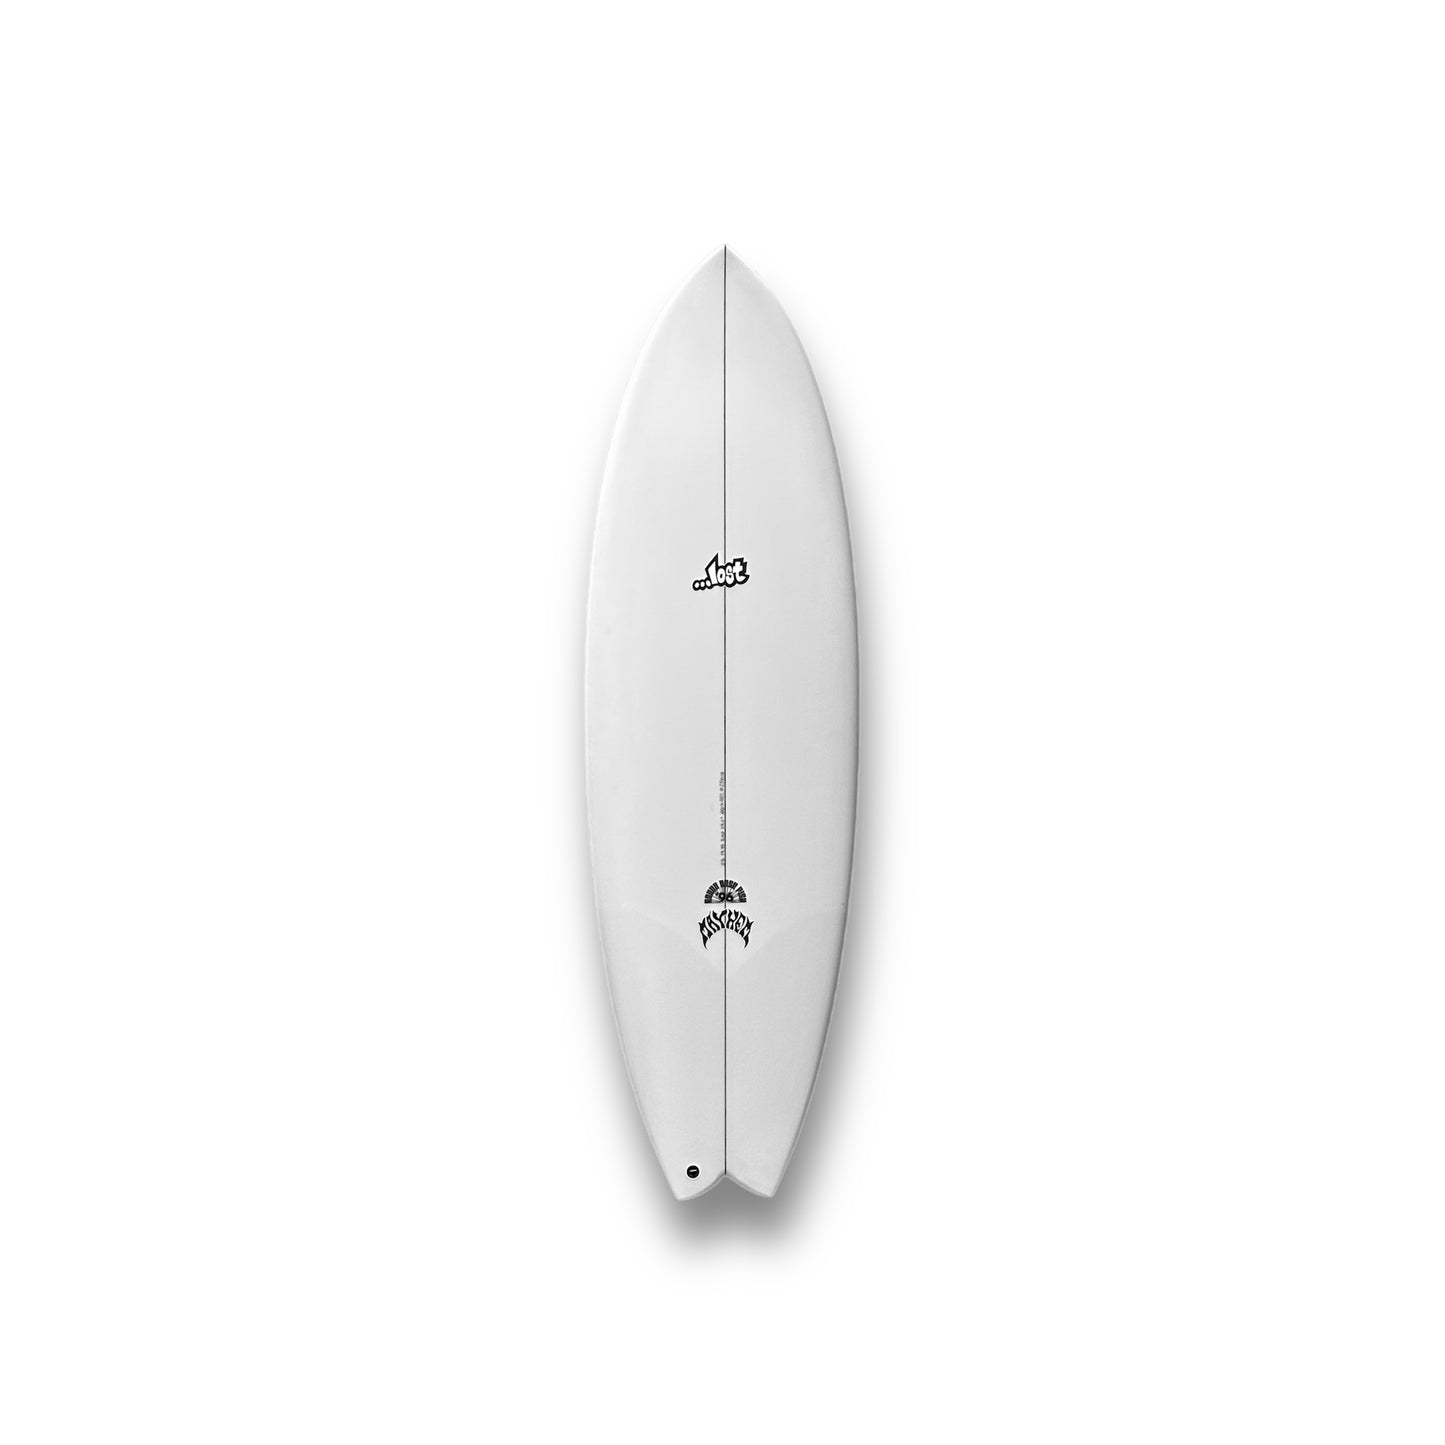 LOST MAYHEM '96 RNF 5'6" SURFBOARD